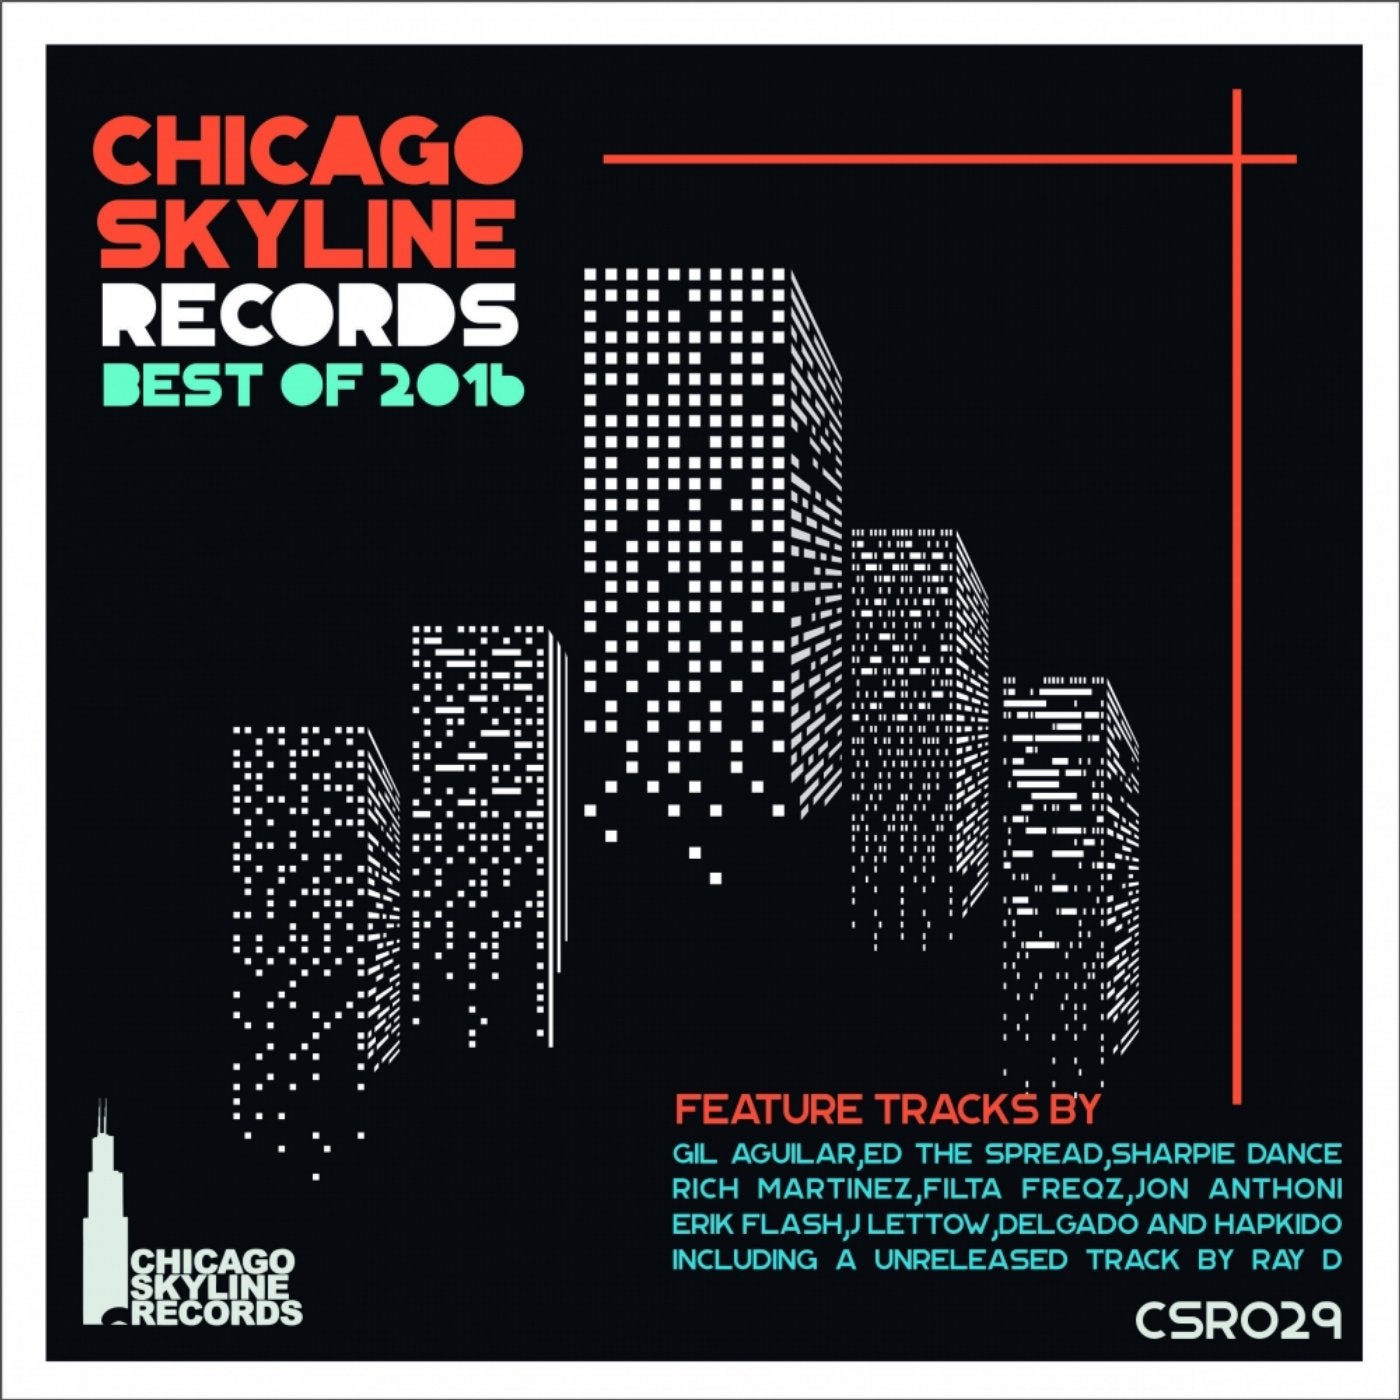 Chicago Skyline Records Best of 2016